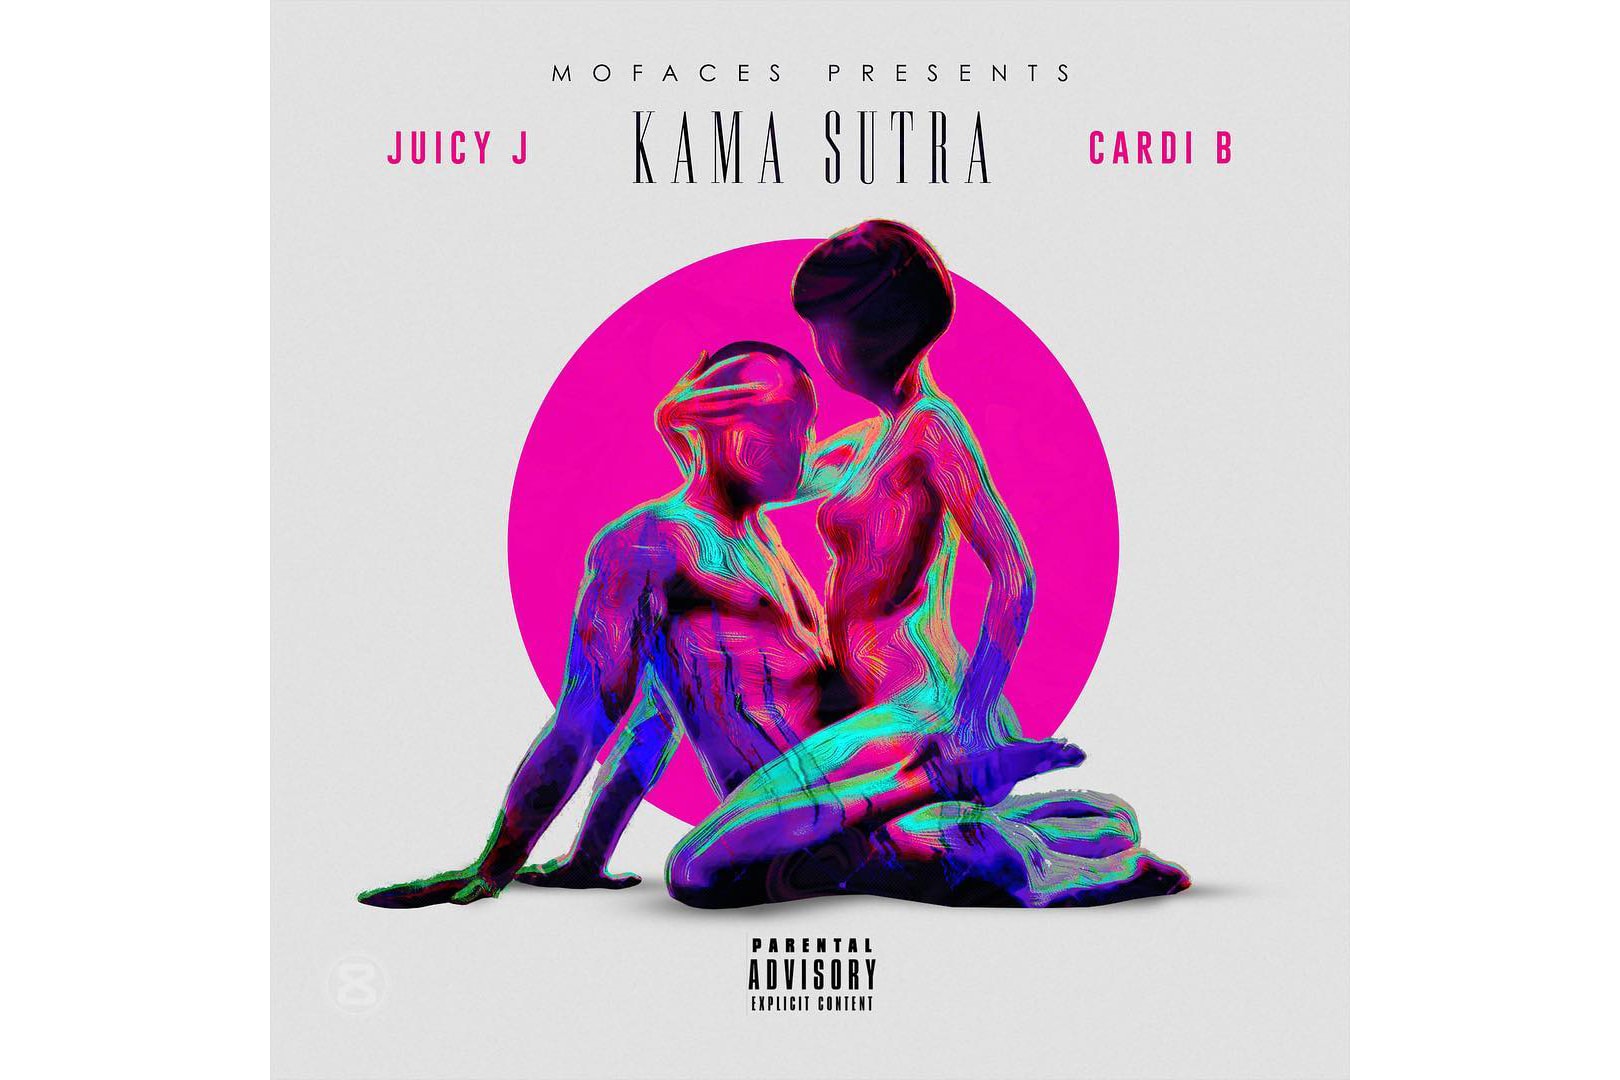 Cardi B Juicy J Kamasutra Single Stream 2017 December 1 Release Date Info Premiere Debut